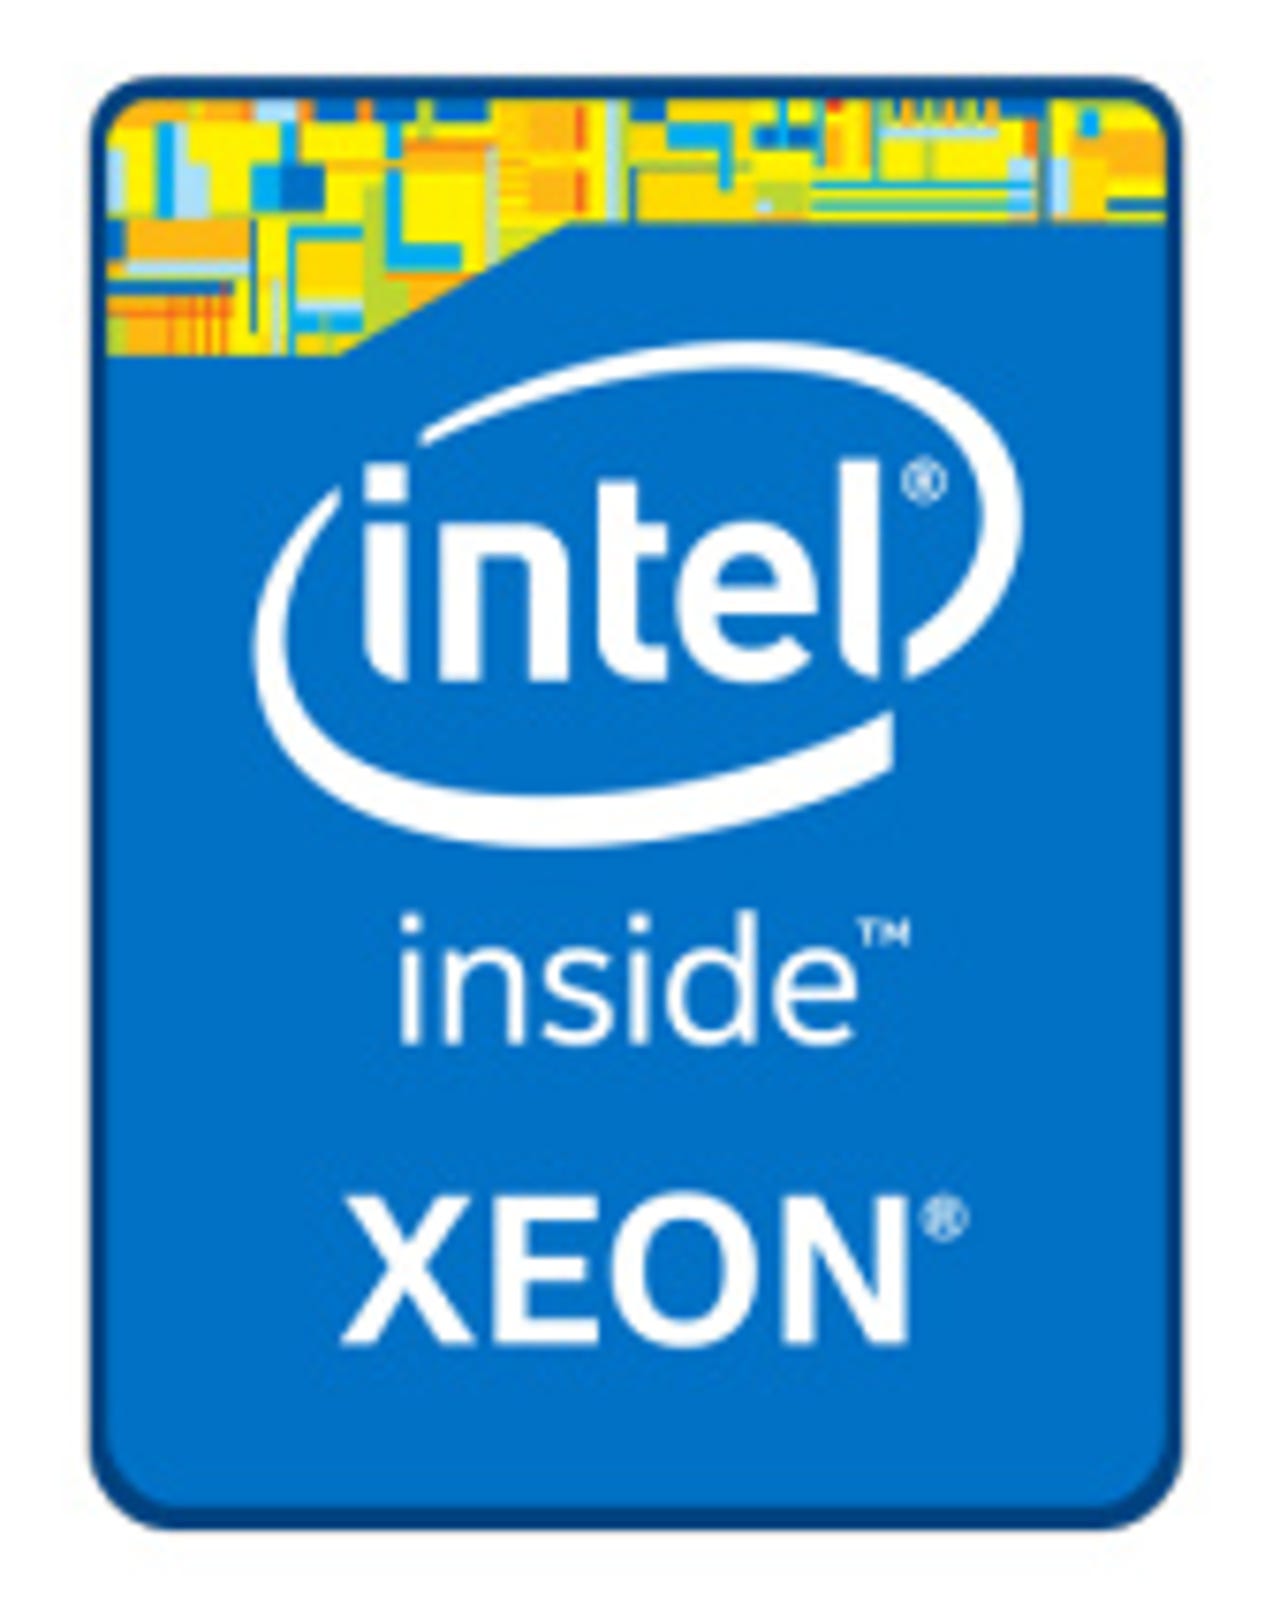 intel-xeon-logo-skylake-mobile-processors-laptop-notebook.jpg